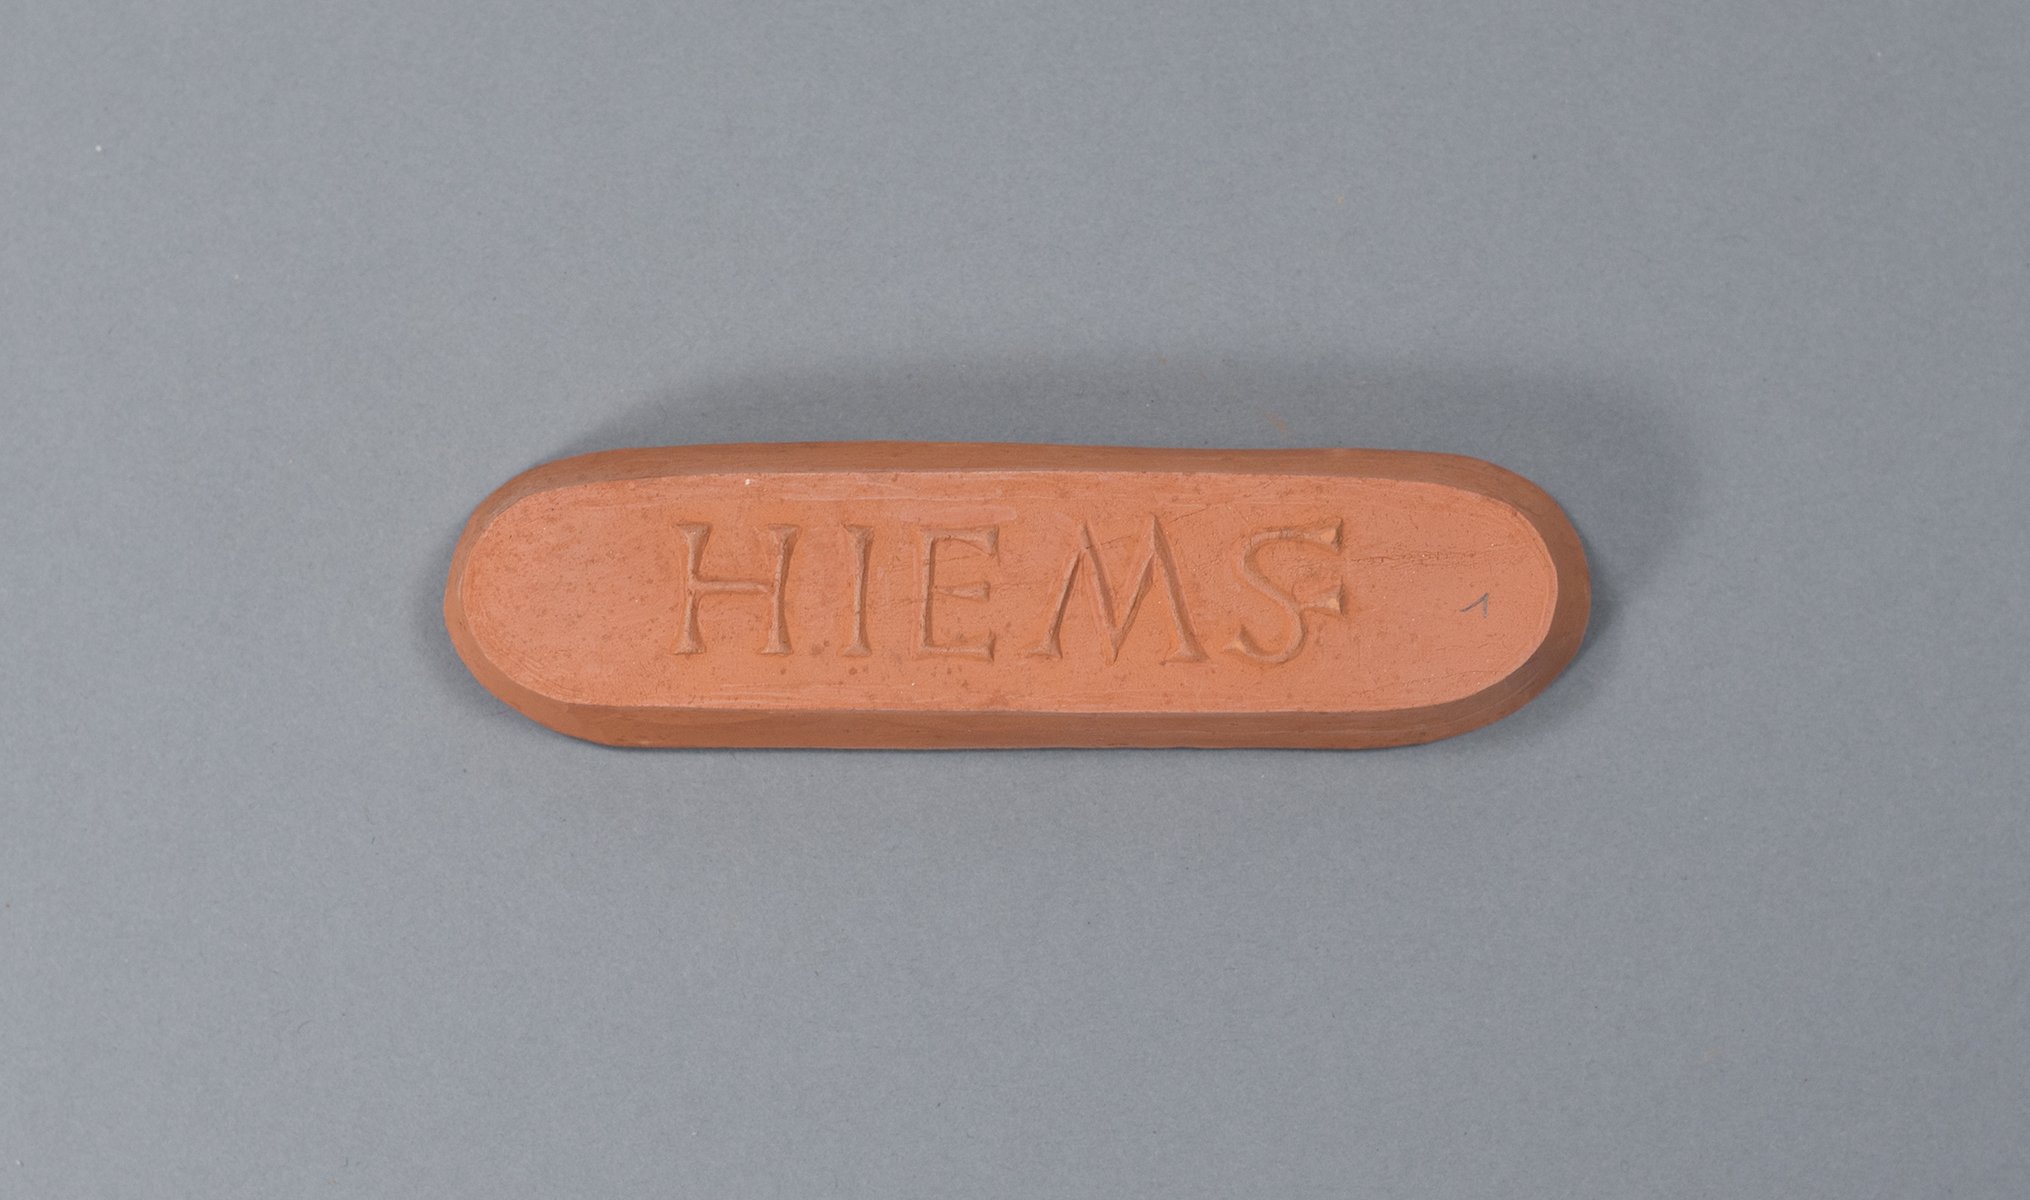 Tongrundiger Positiv-Stempel "HIEMS F" (Terra Sigillata Museum CC BY-NC-ND)